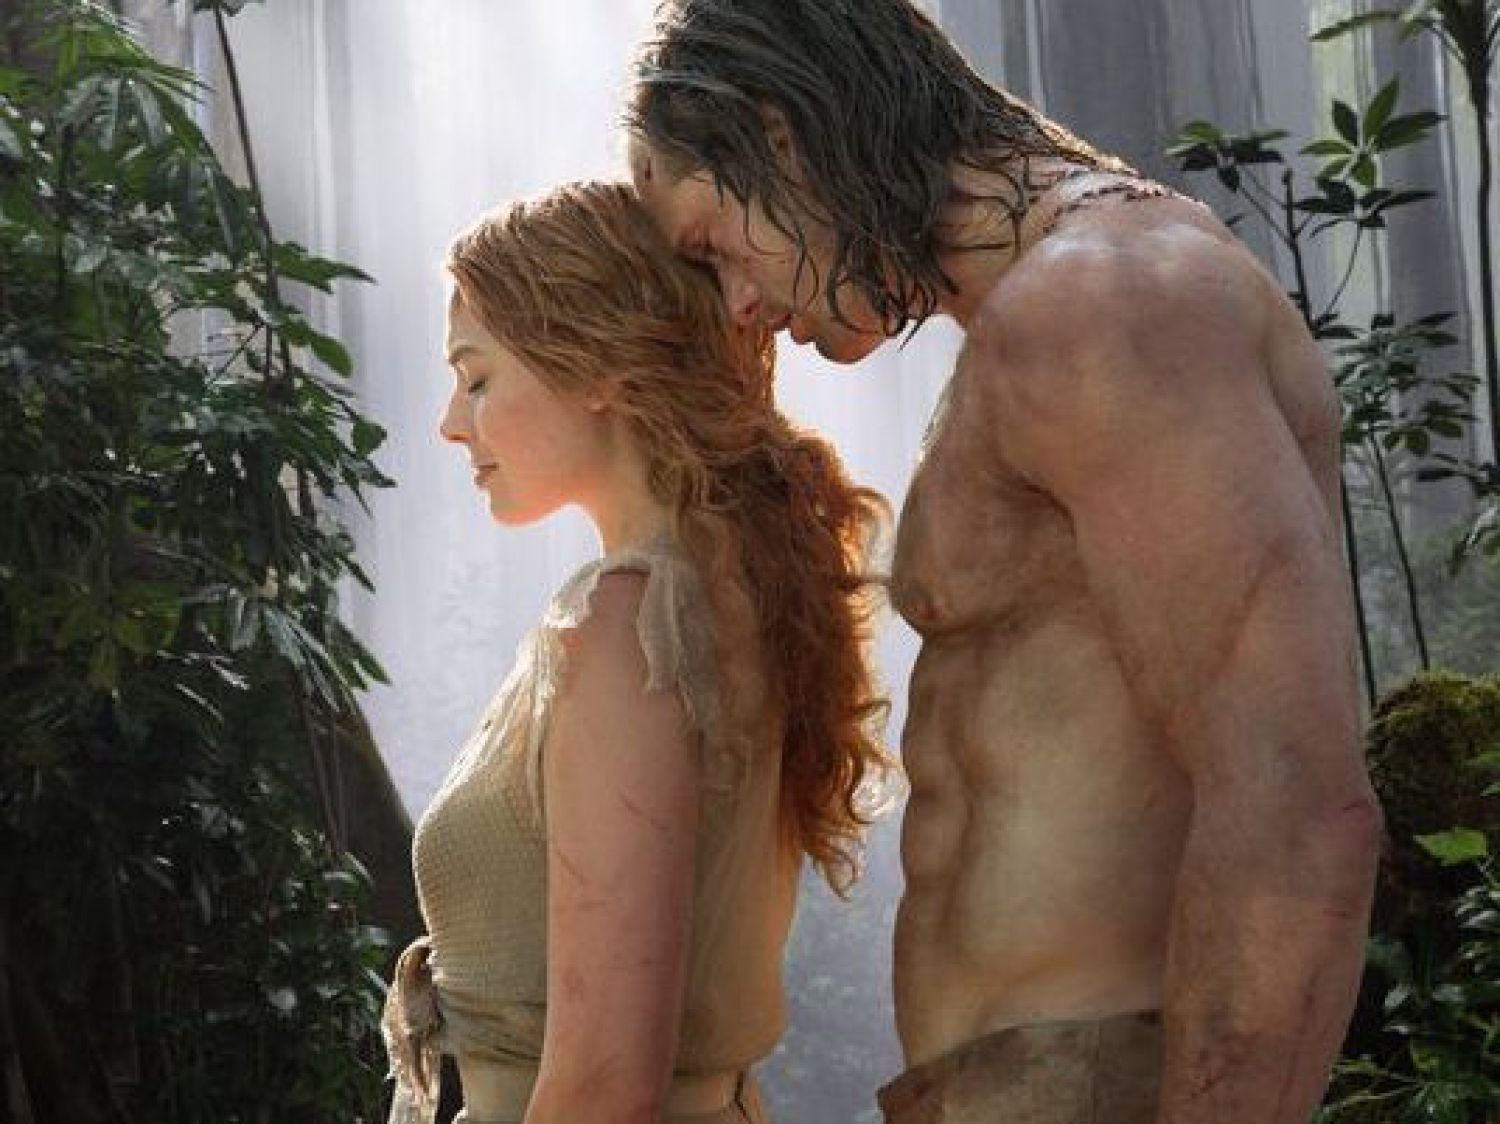 A Lenda de Tarzan | Filme tem novo pôster divulgado: “Humano. Natureza”